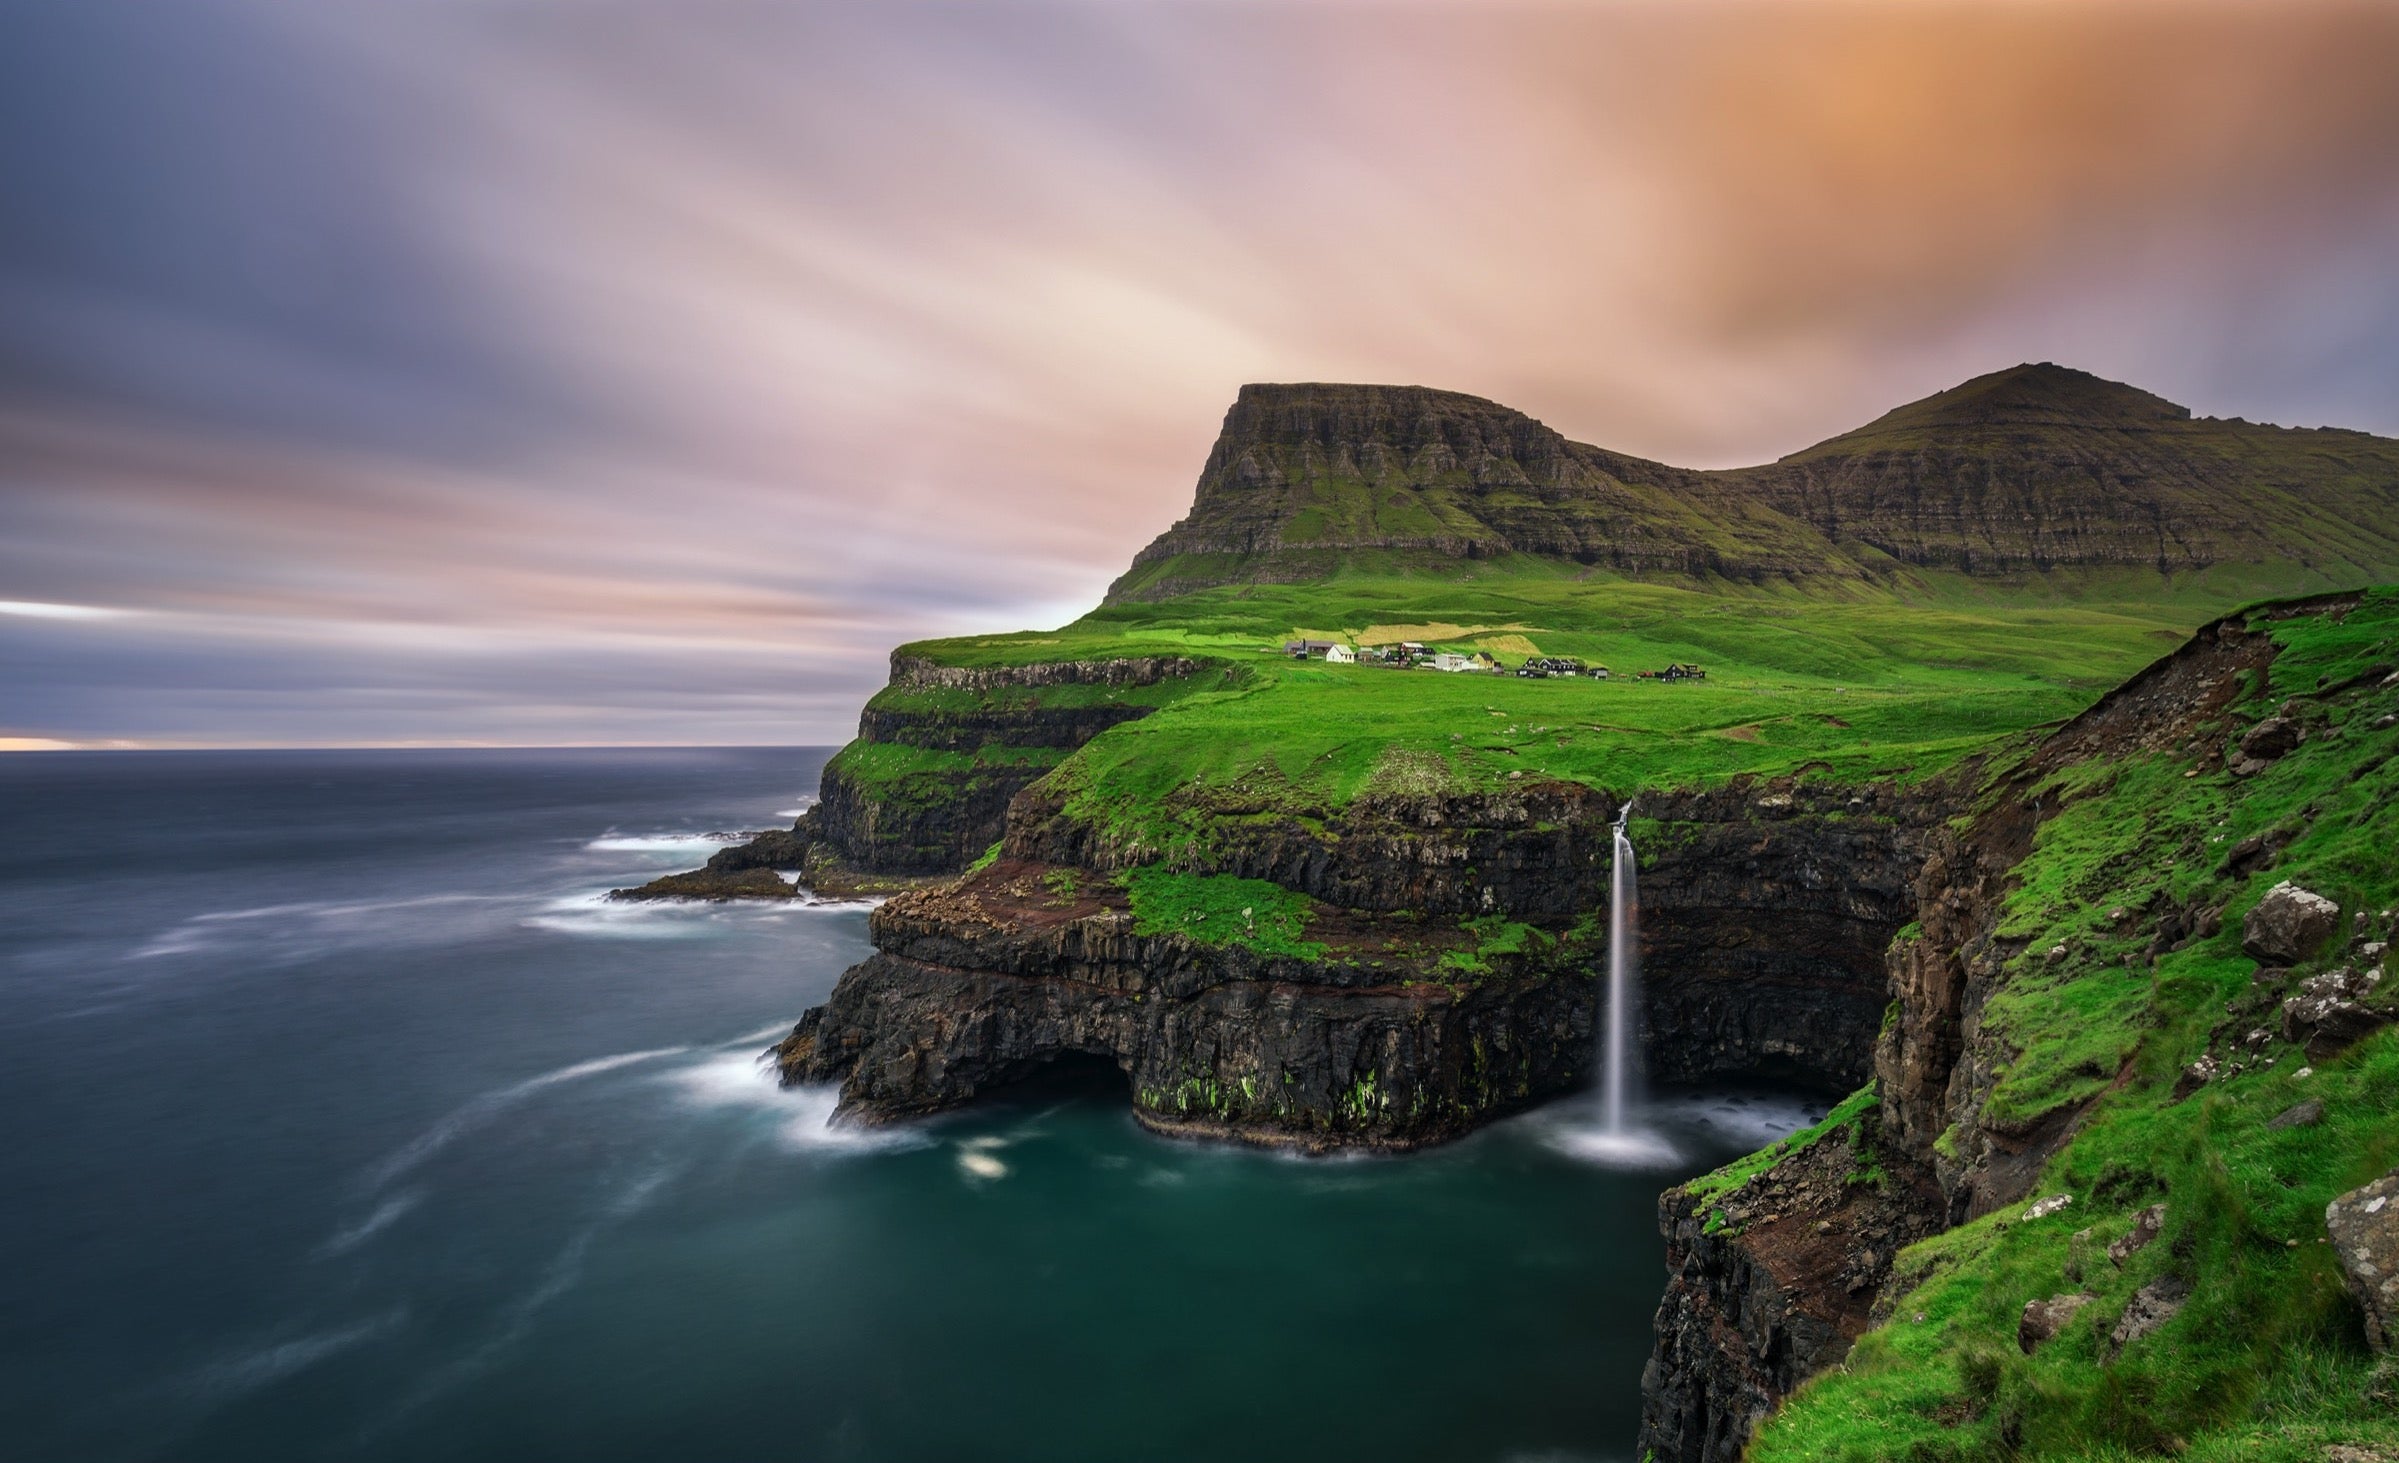 The Vagar waterfall in the Faroe Islands